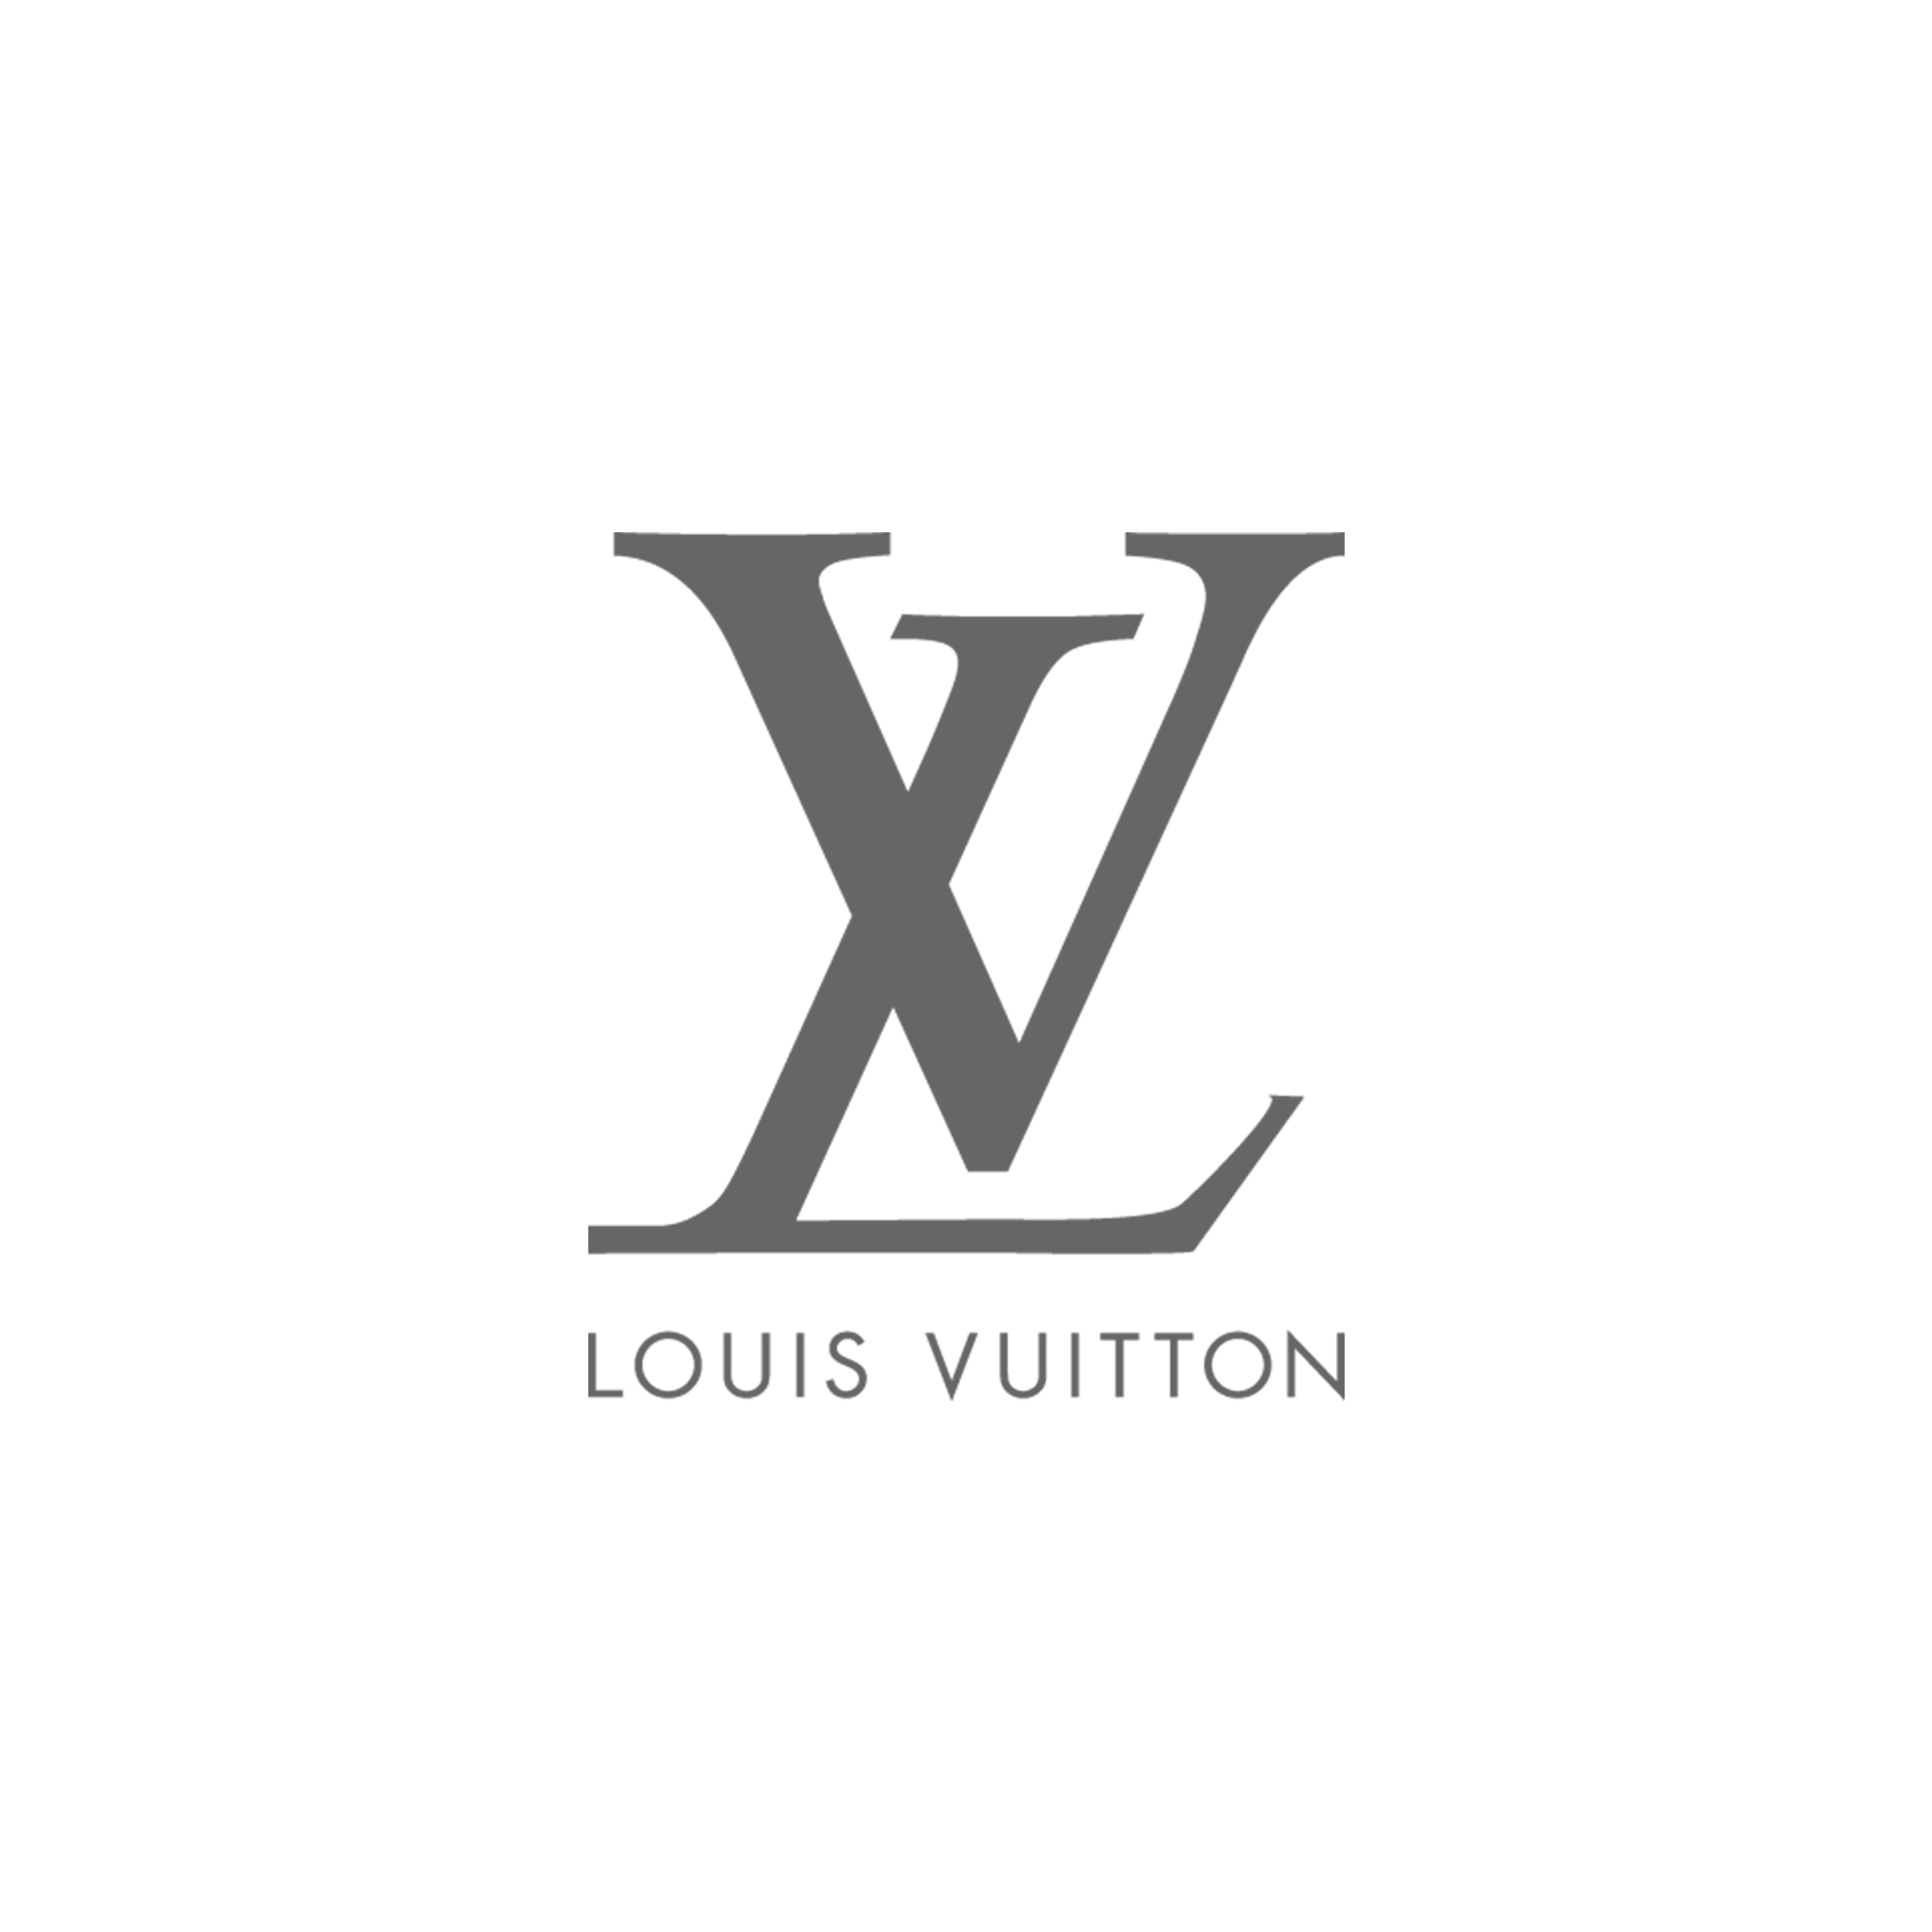 Легендарные бренды. Знак Луис вуитон. Louis Vuitton логотип. Знак Луи Виттона. Луи вьютон знак.